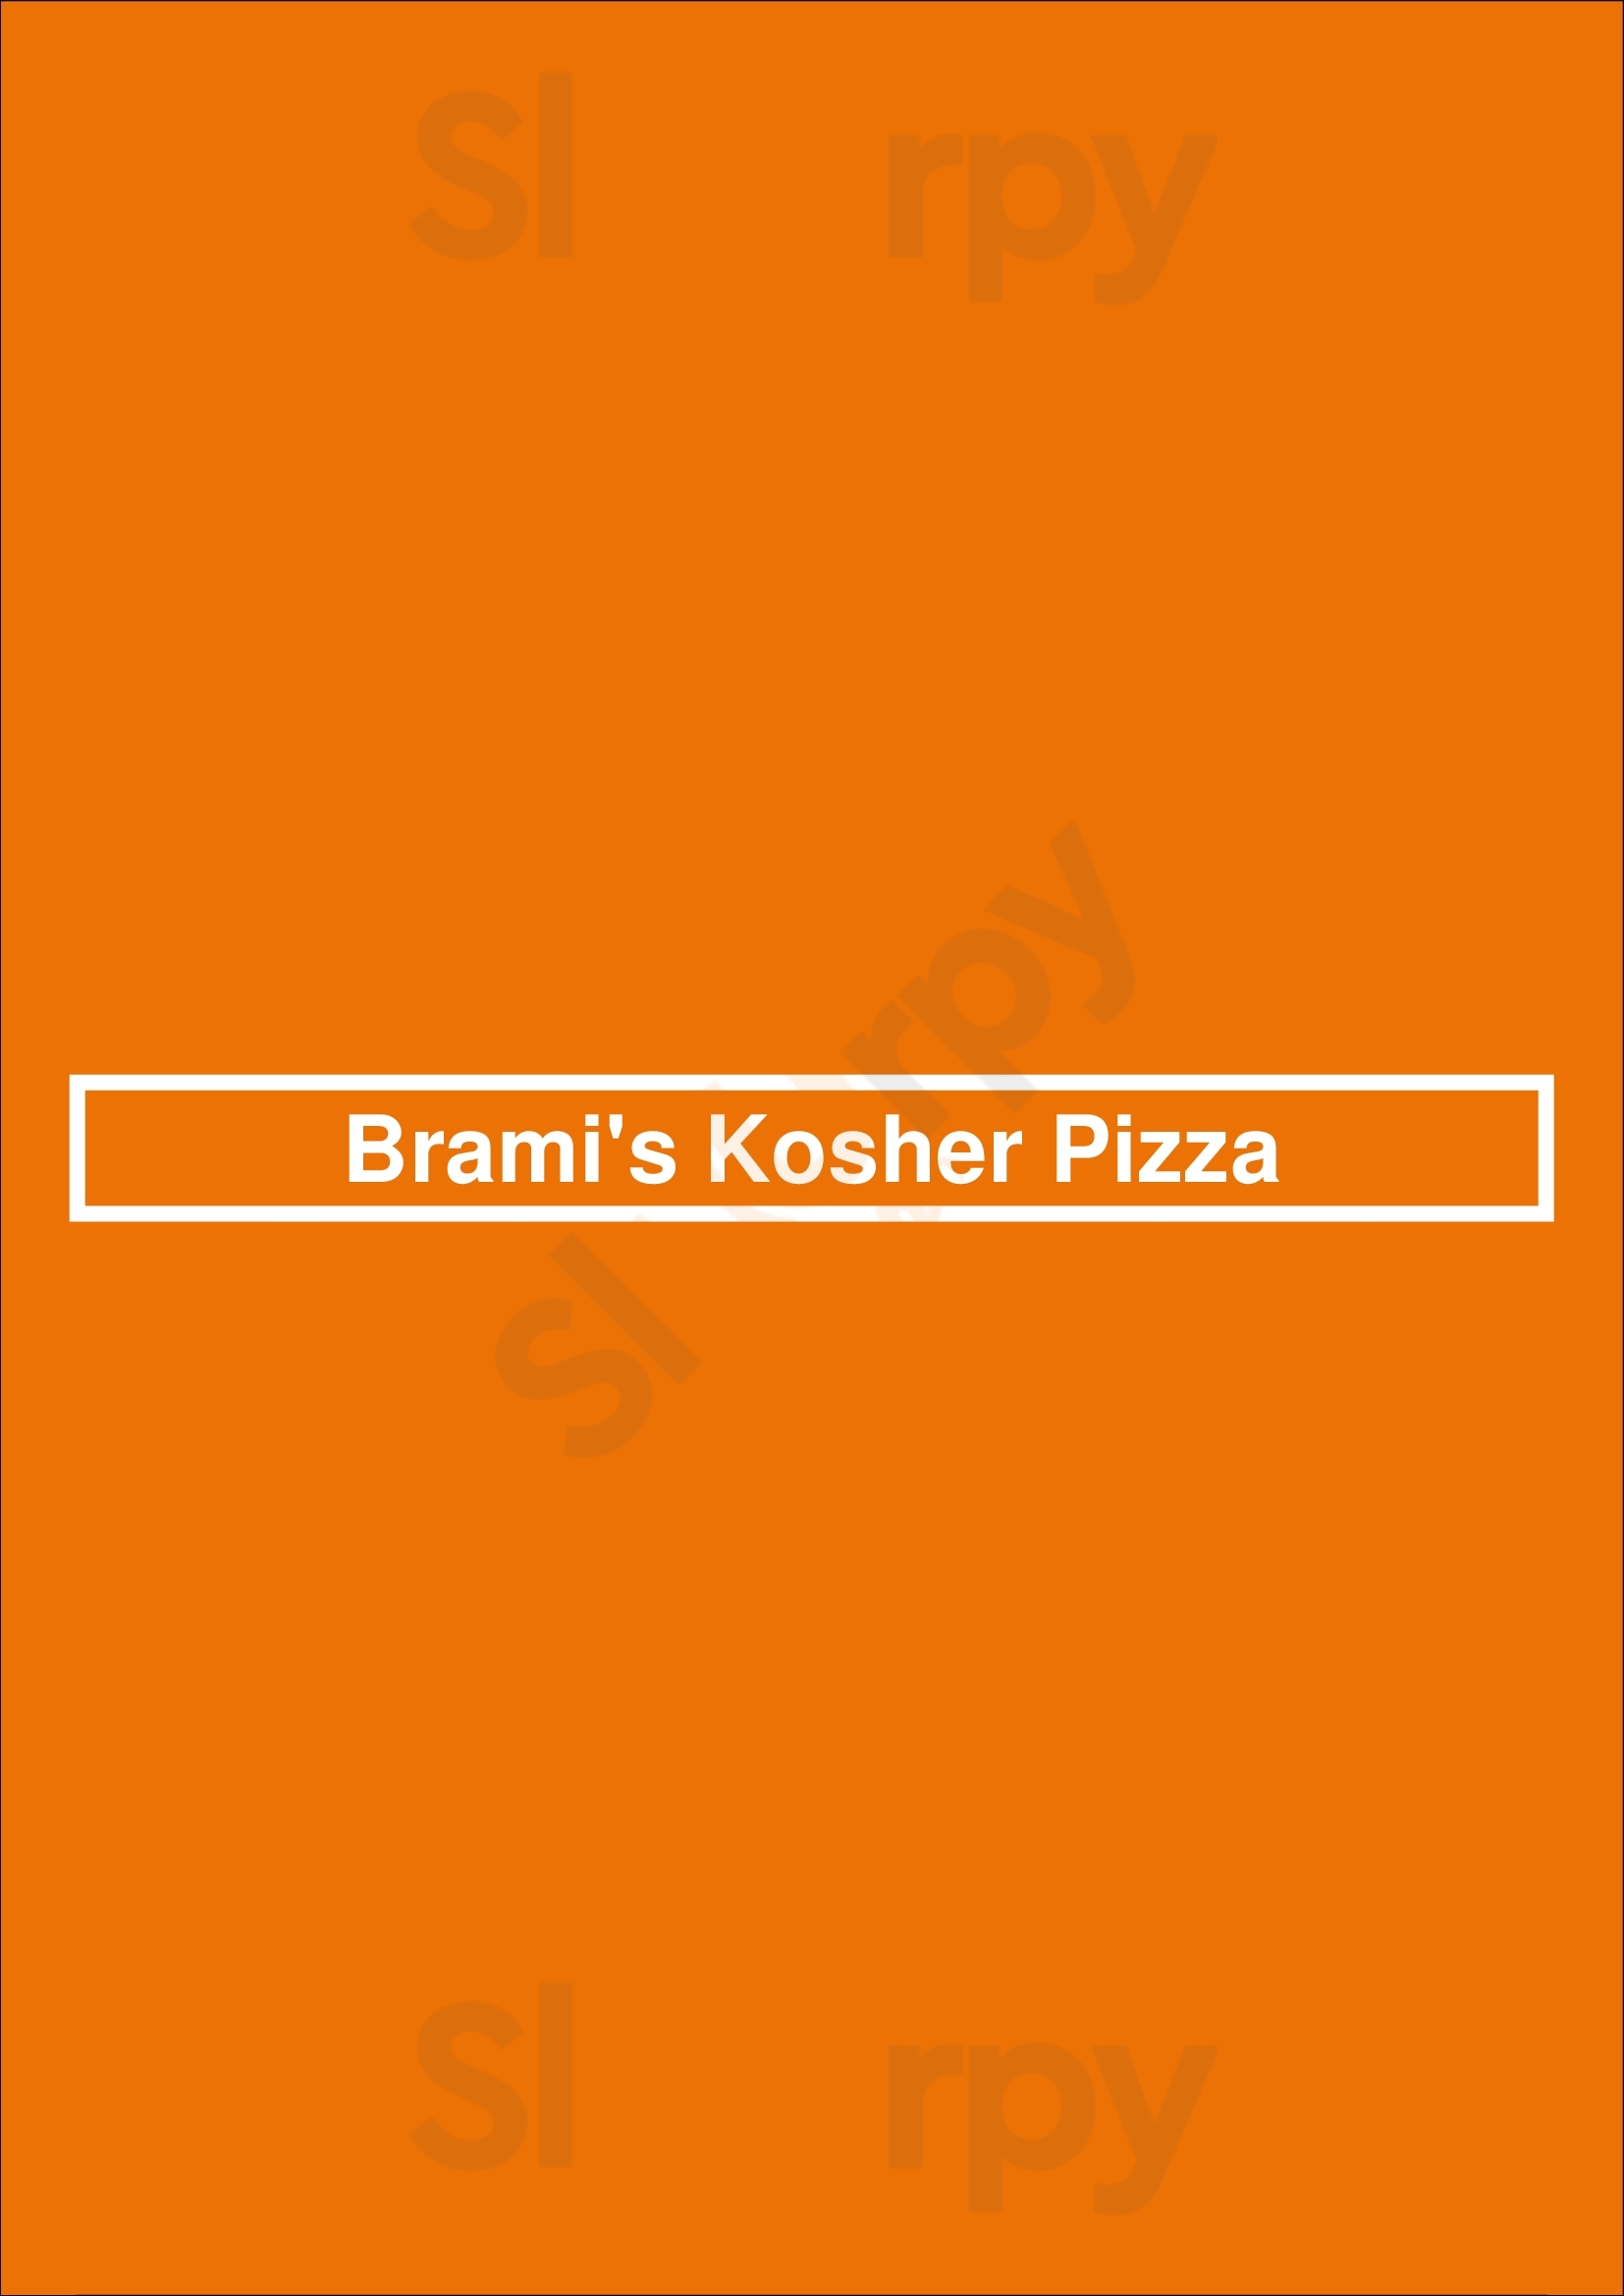 Brami's Kosher Pizza Los Angeles Menu - 1